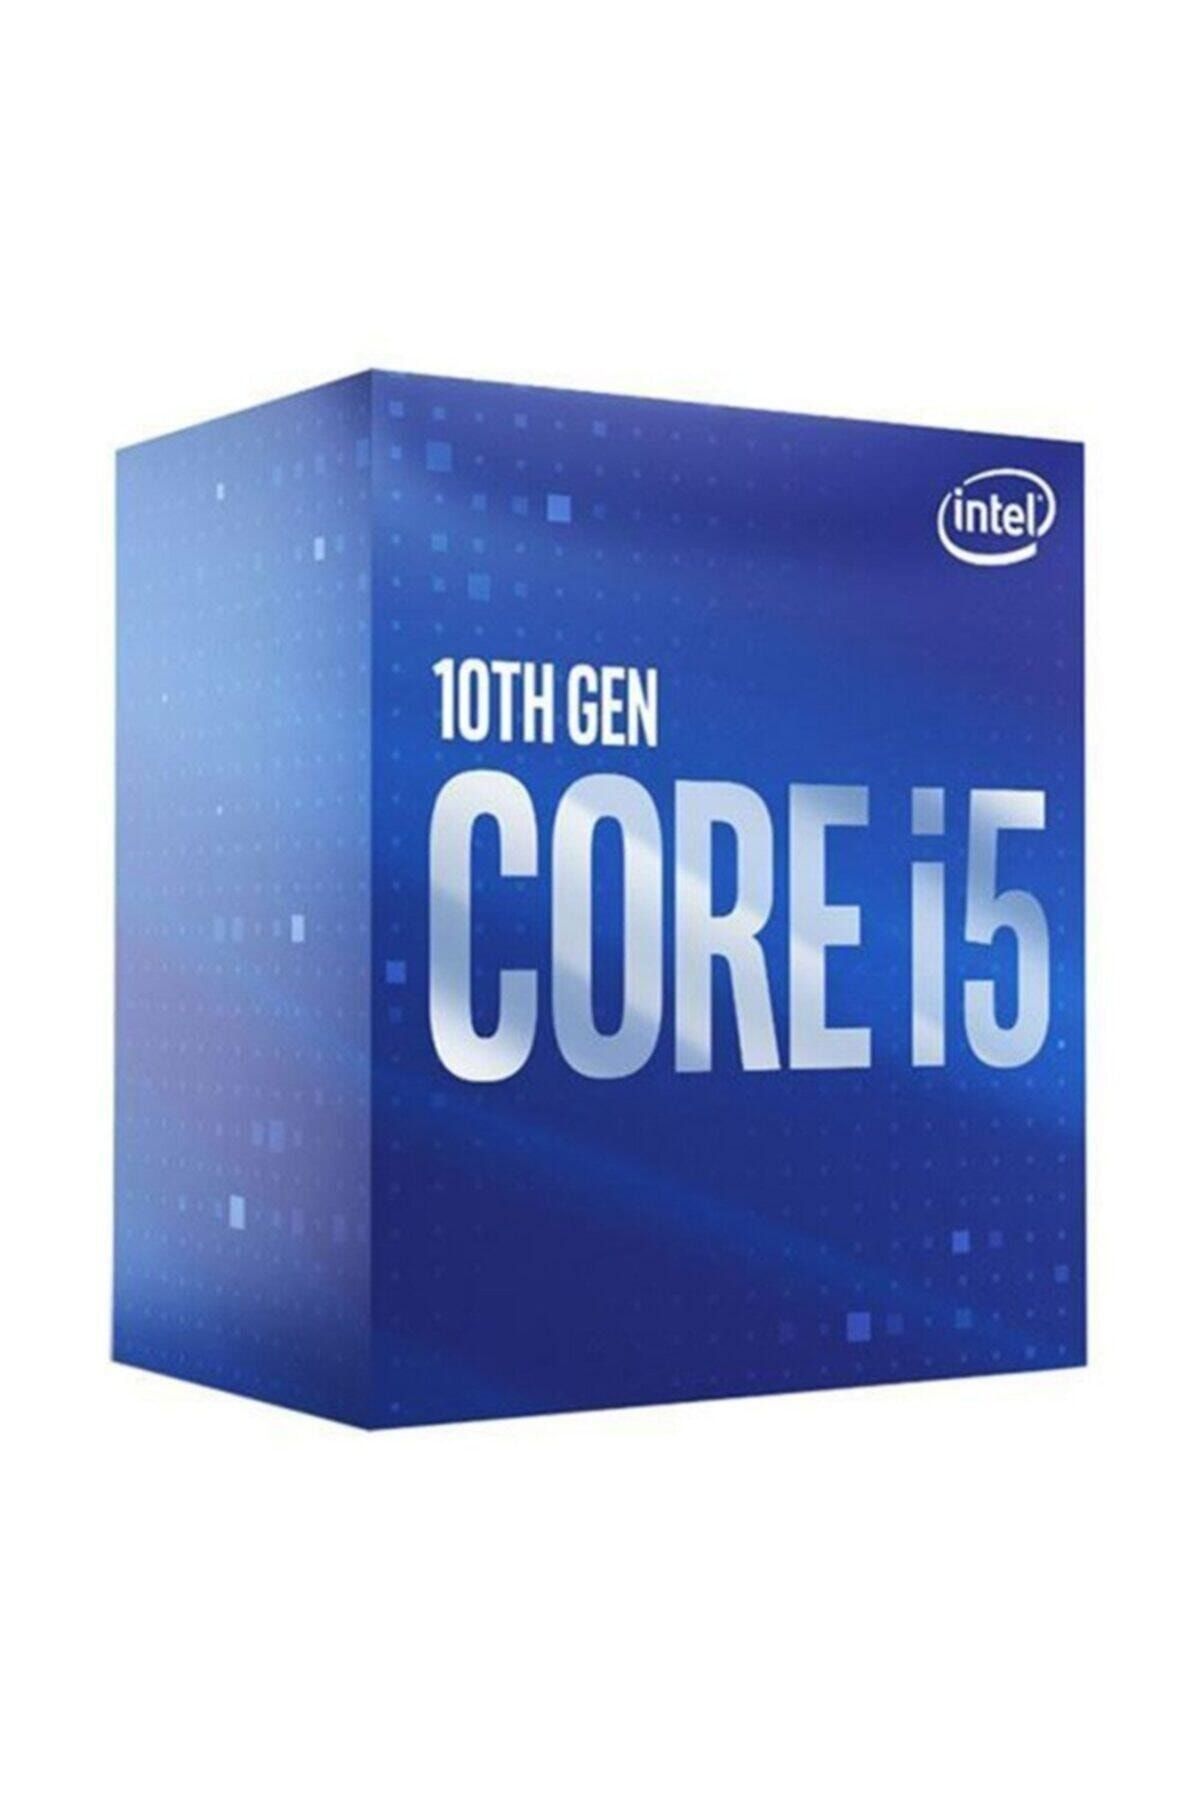 Intel Cometlake Core I5 10400f 2.9ghz 1200p 12mb